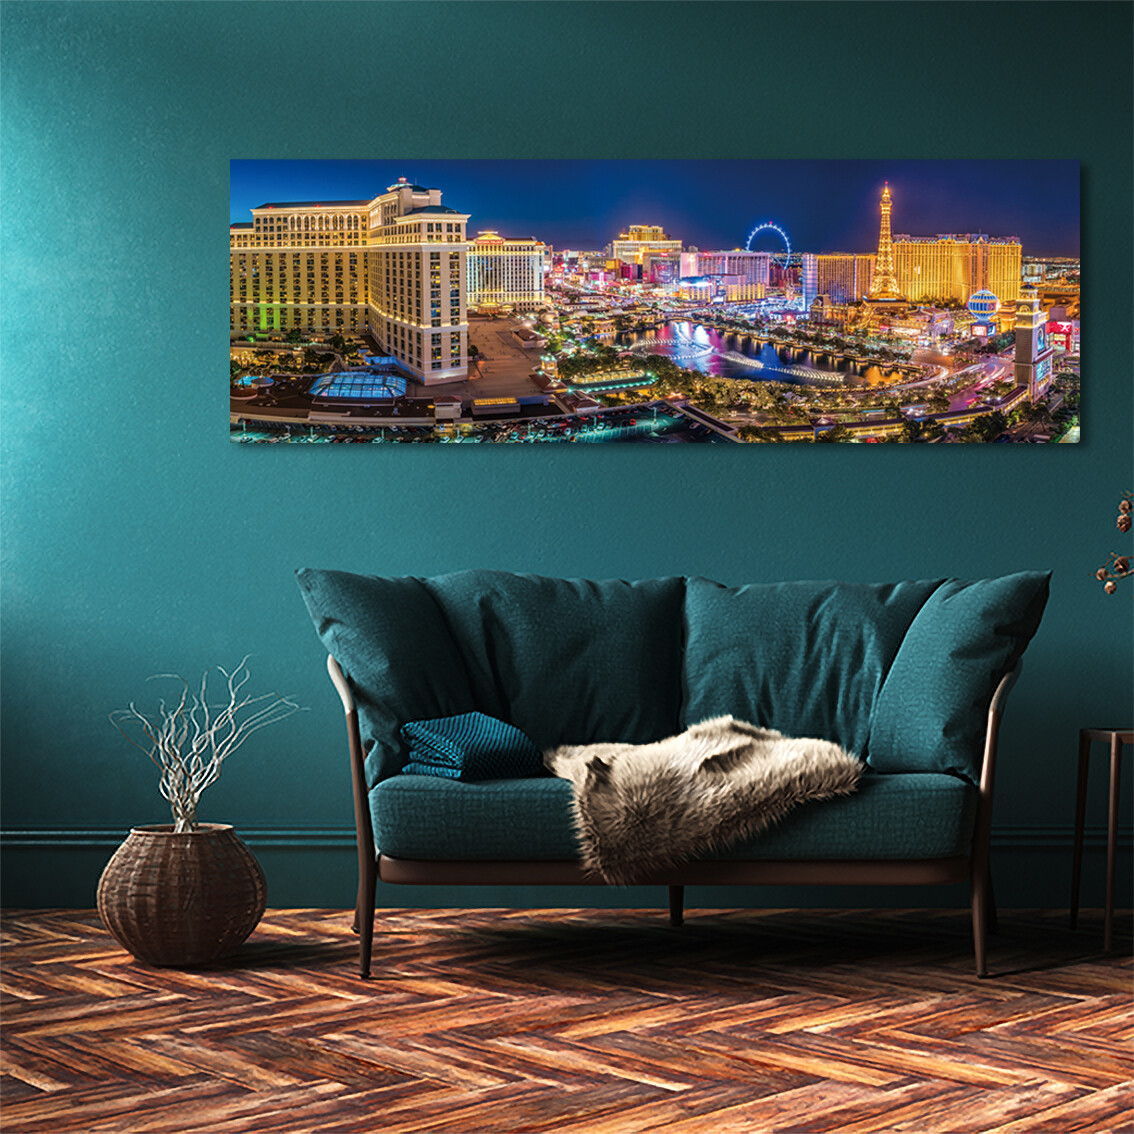 Las Vegas Skyline - Modern Luxury Wall art Printed on Acrylic Glass - Frameless and Ready to Hang